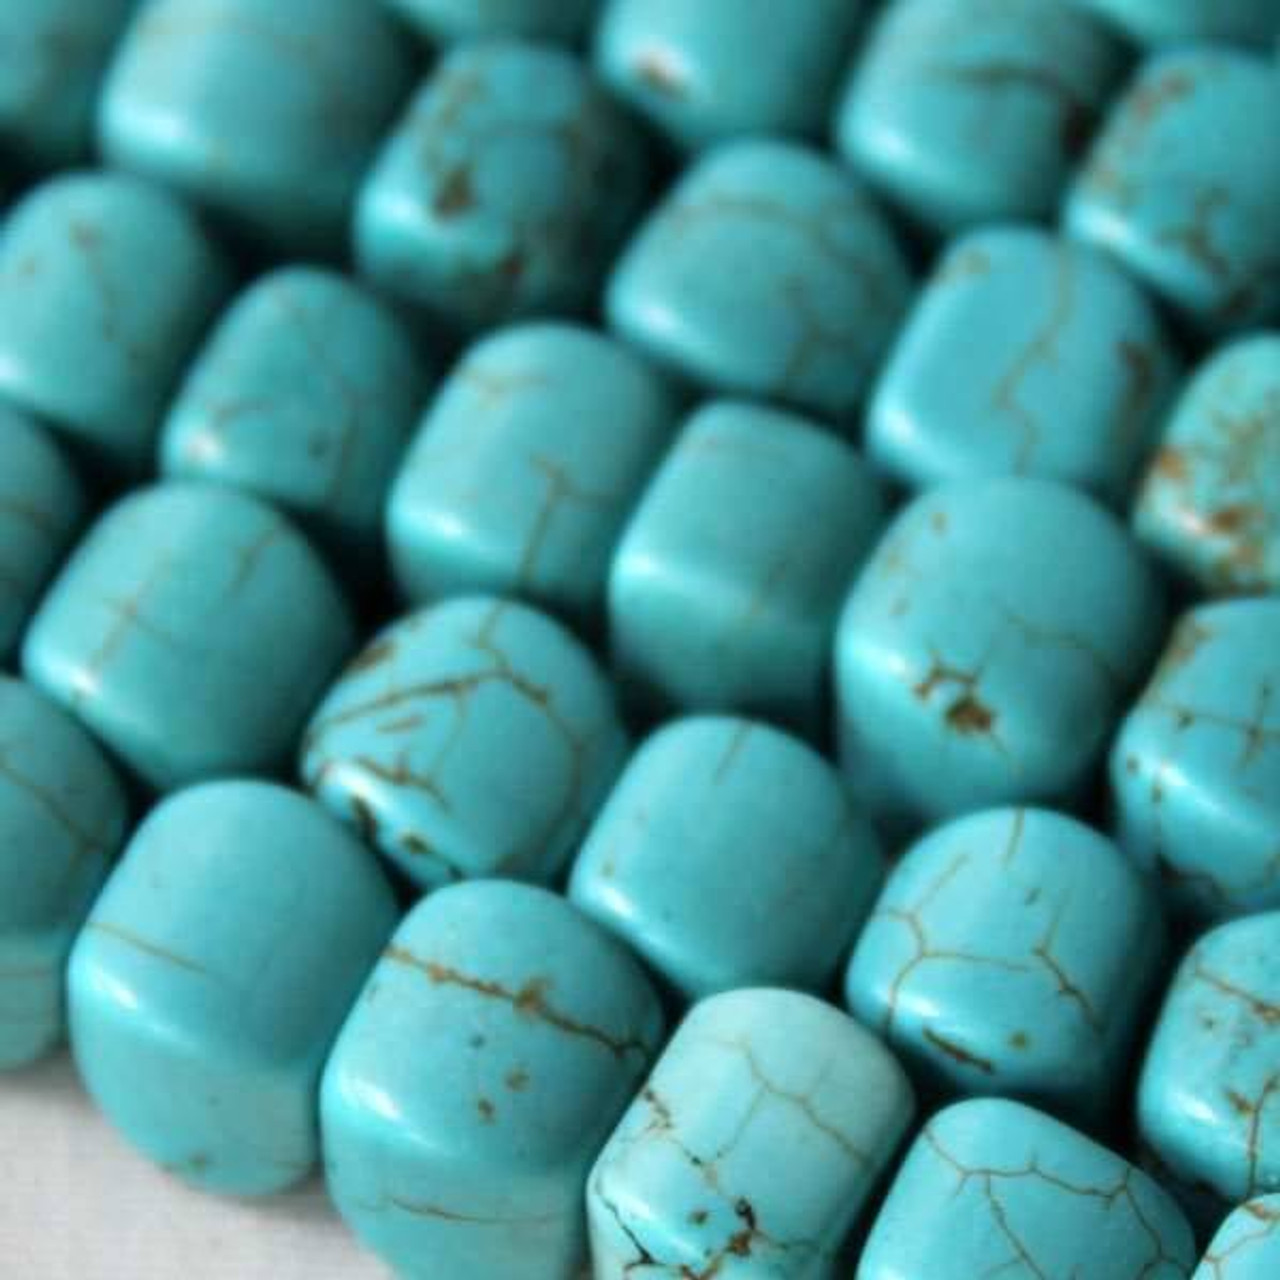 8mm Turquoise Howlite Large Hole Beads